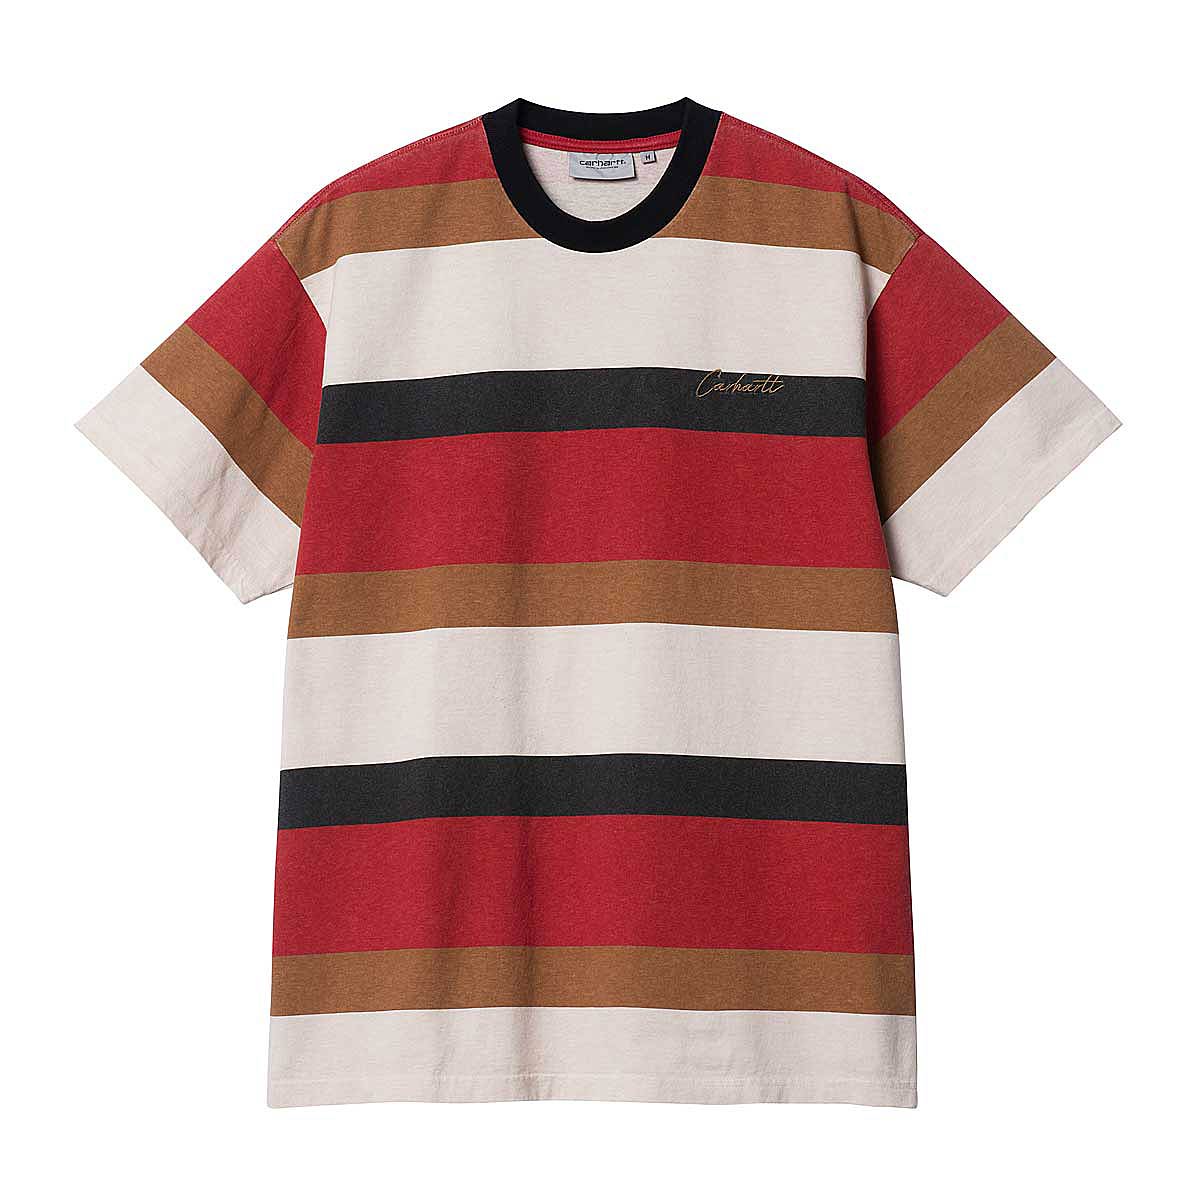 Carhartt Wip S/s Crouser T-shirt, Crouser Stripe, Arcade S